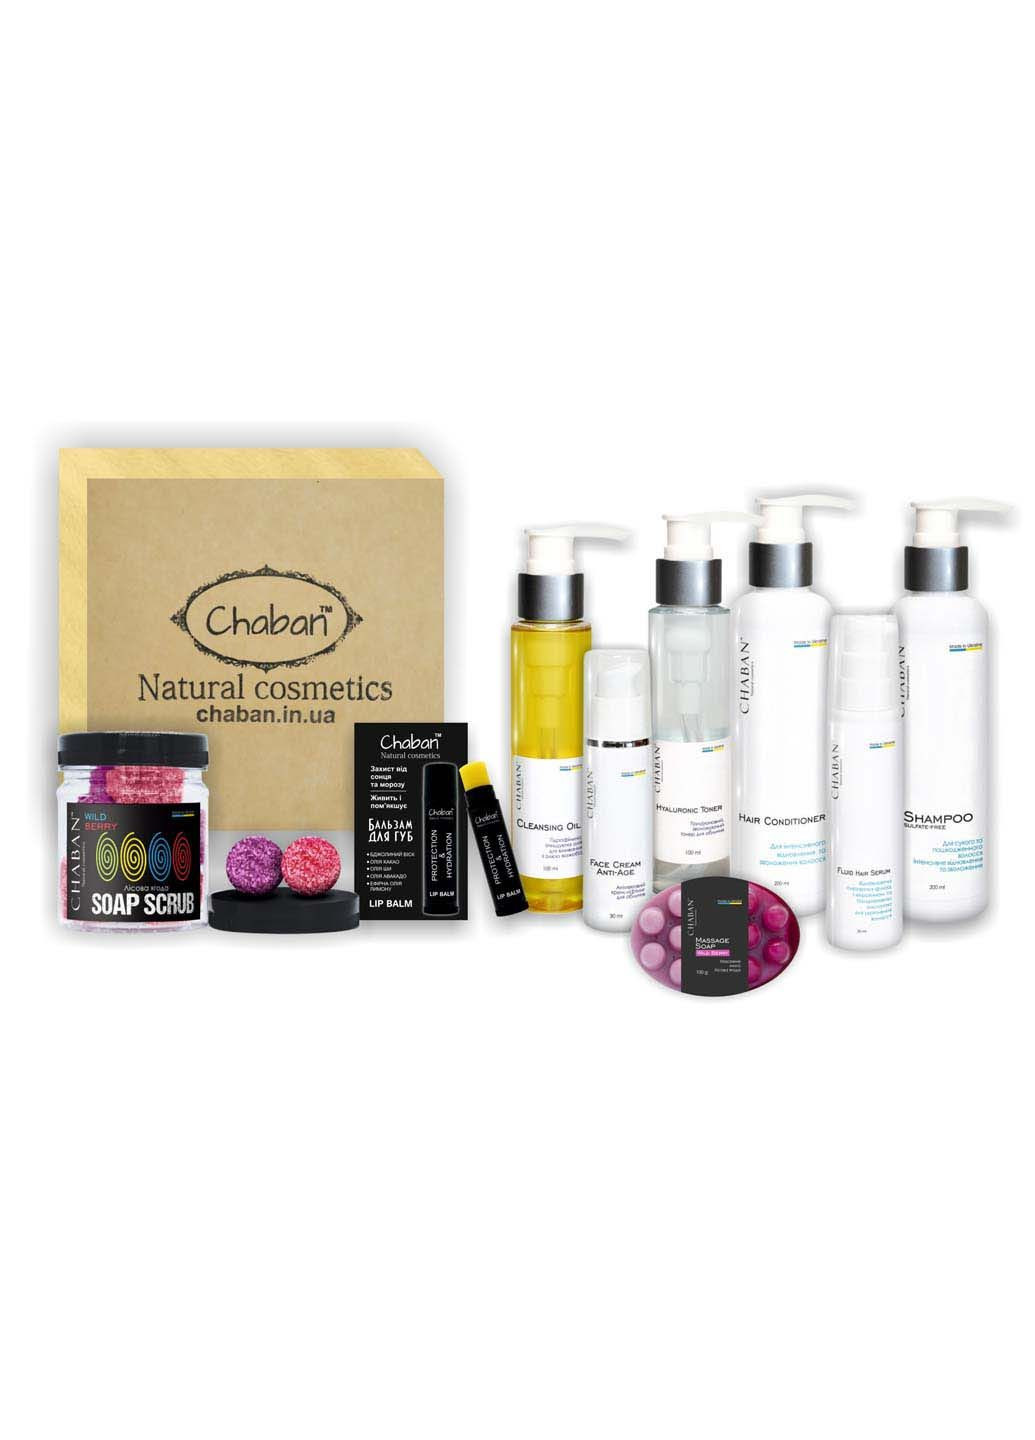 Подарочный набор Beauty Box №10 All-Inclusive Chaban Natural Cosmetics (280918282)